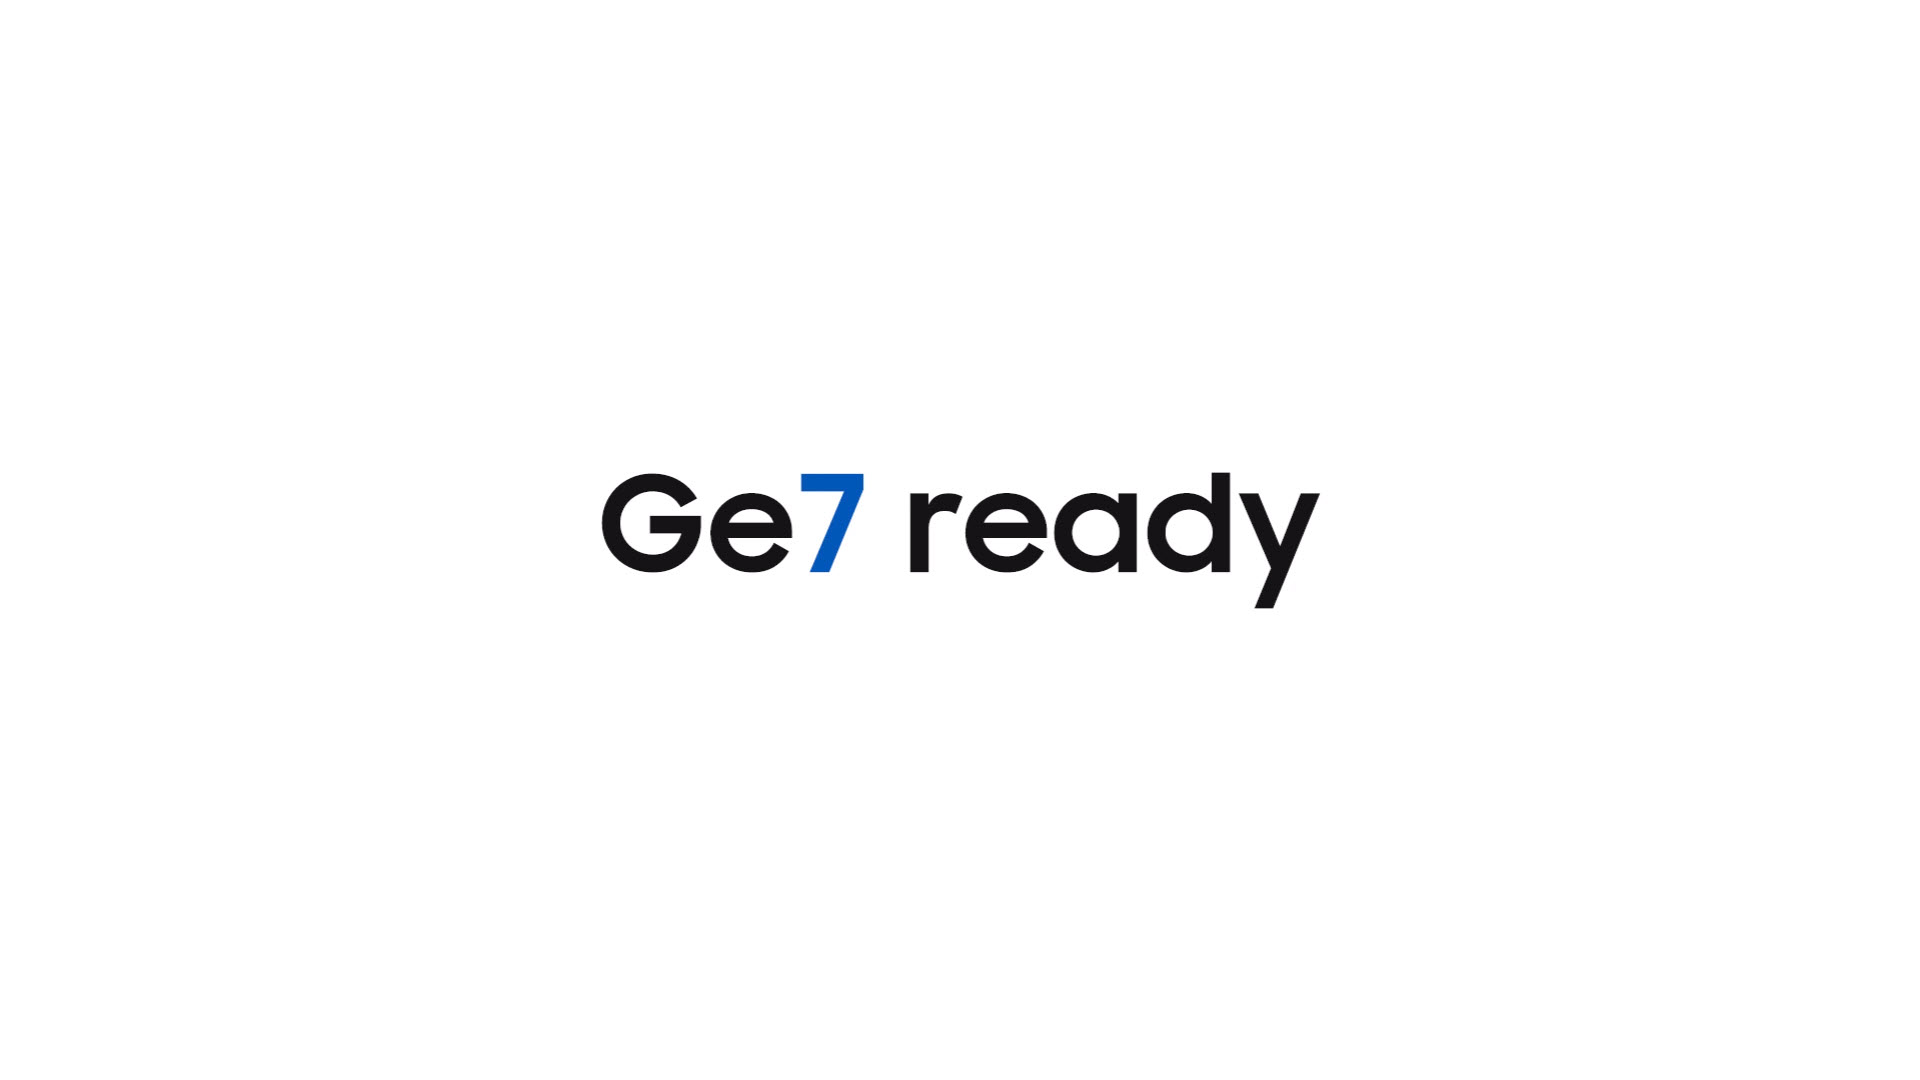 Samsung เตรียมเปิดตัว Galaxy S7 edge Olympic Edition ในวันที่ 7 เดือน 7 แล้ว